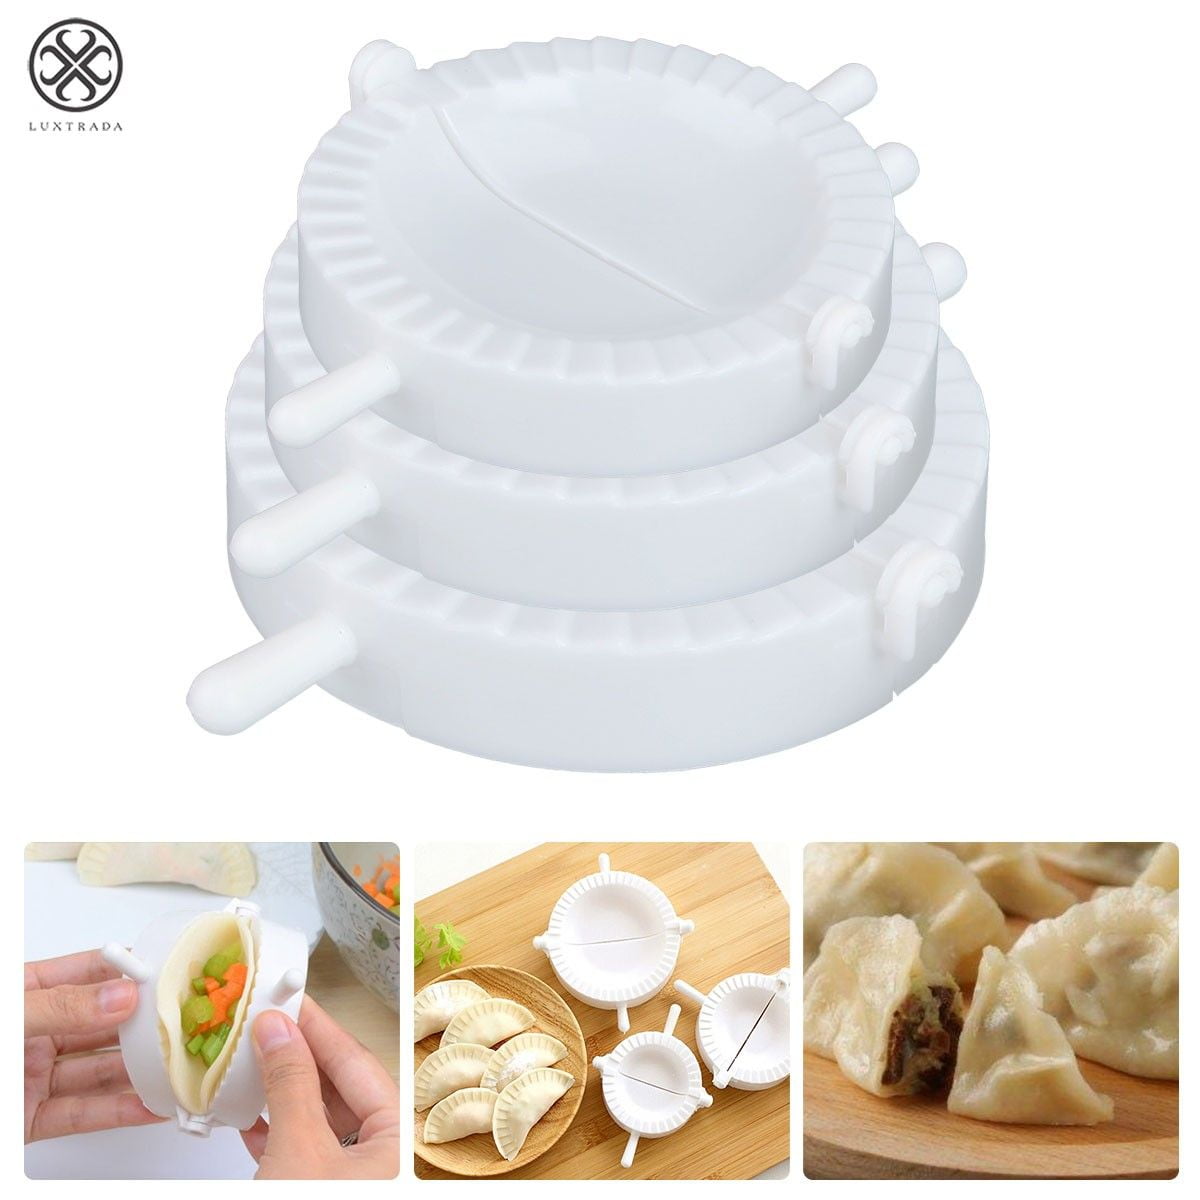 Dumpling Maker Press Set of 3 Molds Plastic for Cooking Pierogi Ravioli 3 Sizes